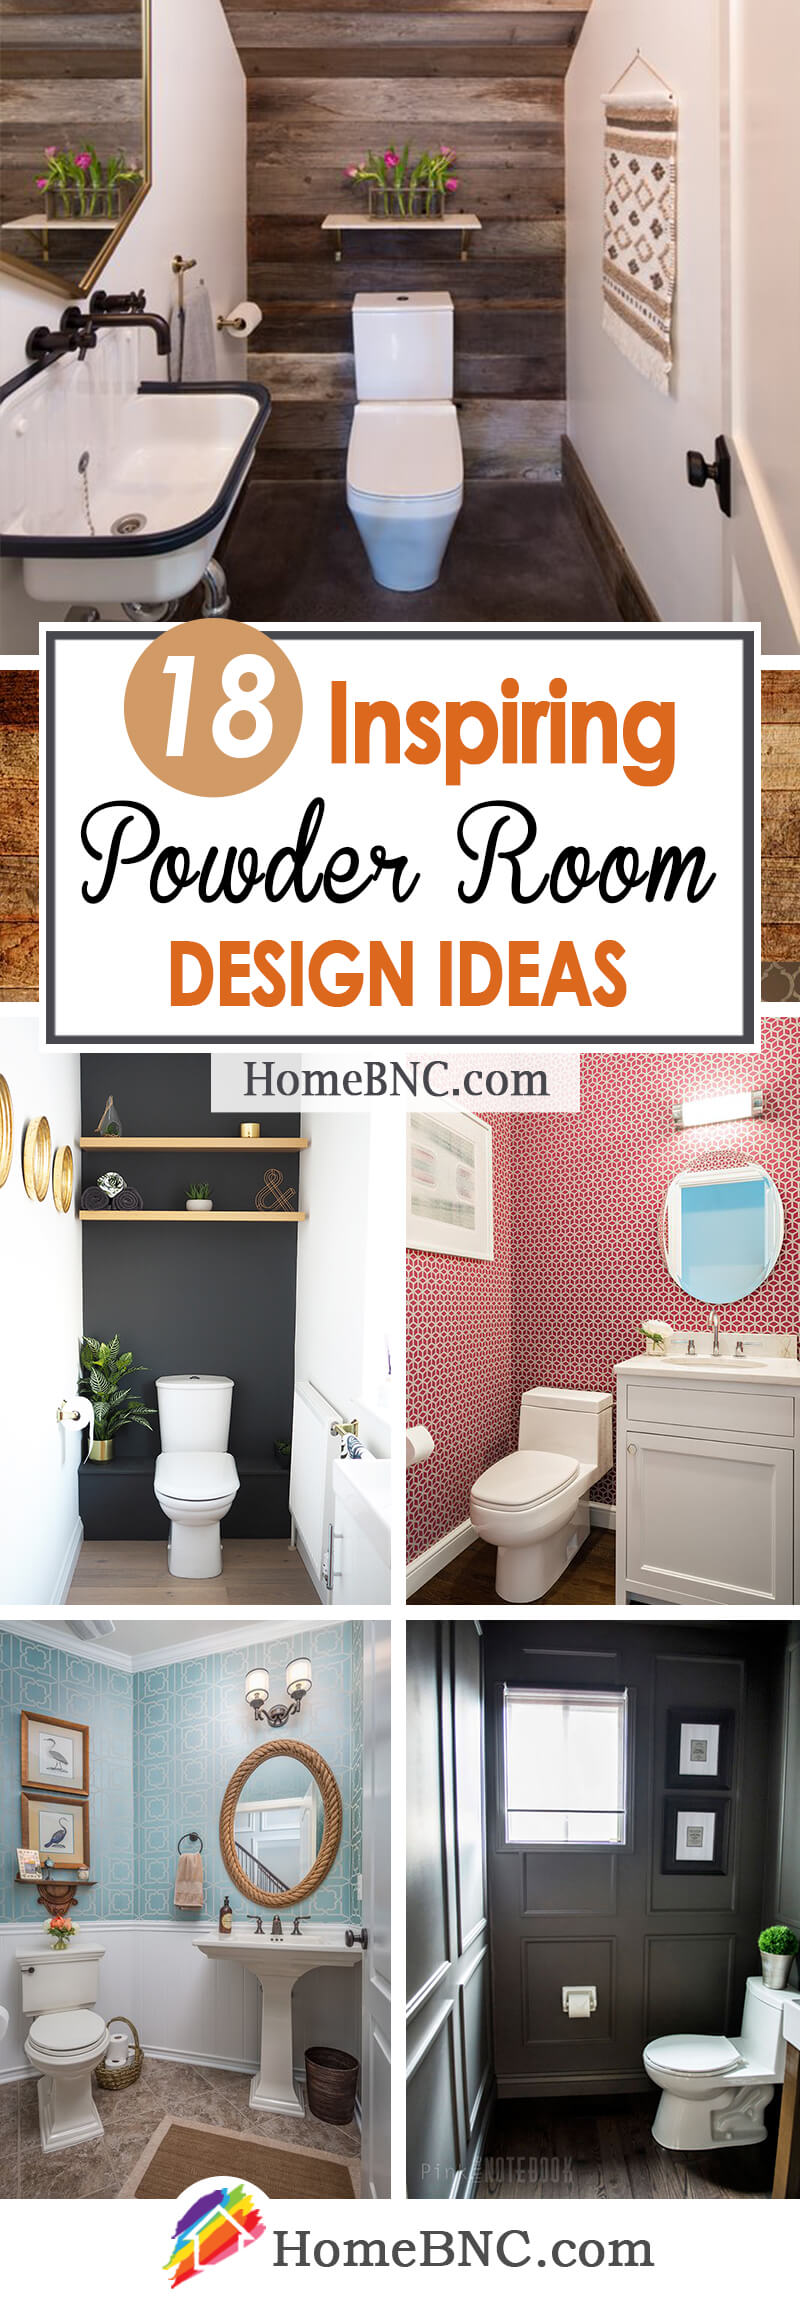 Powder Room Art Ideas: Great Ideas